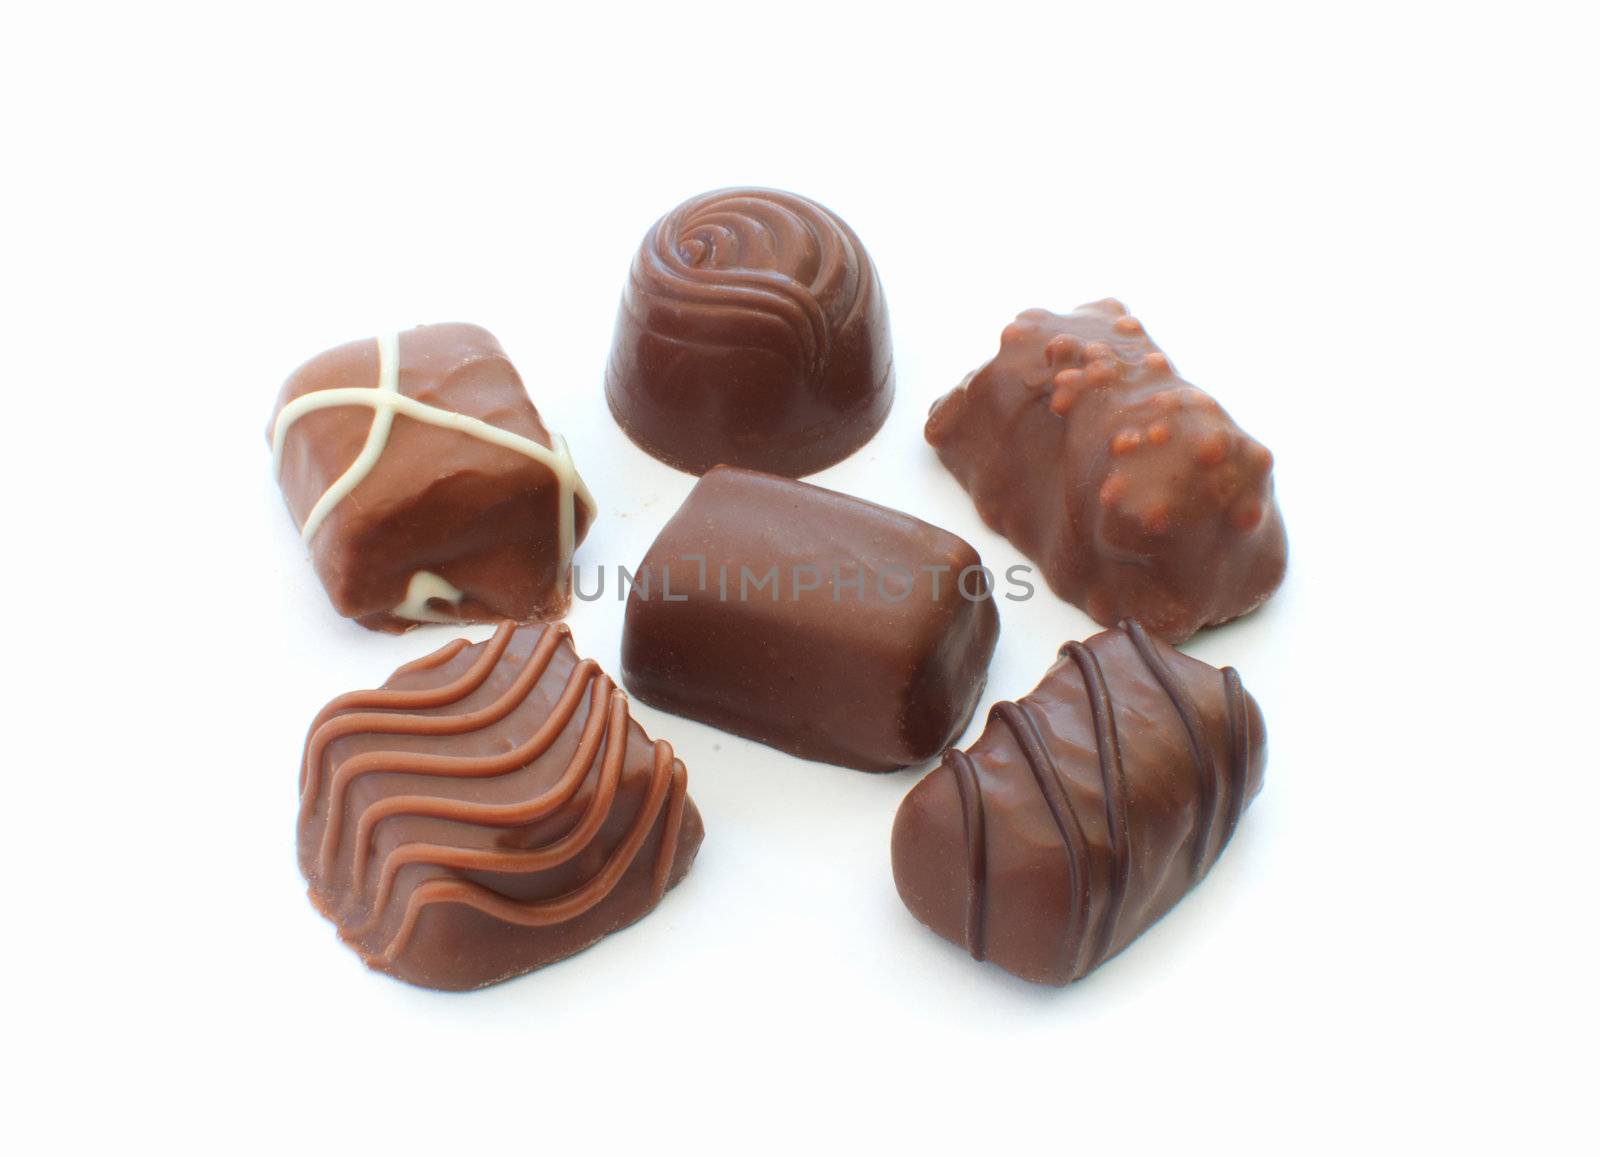 Chocolates  by unikpix